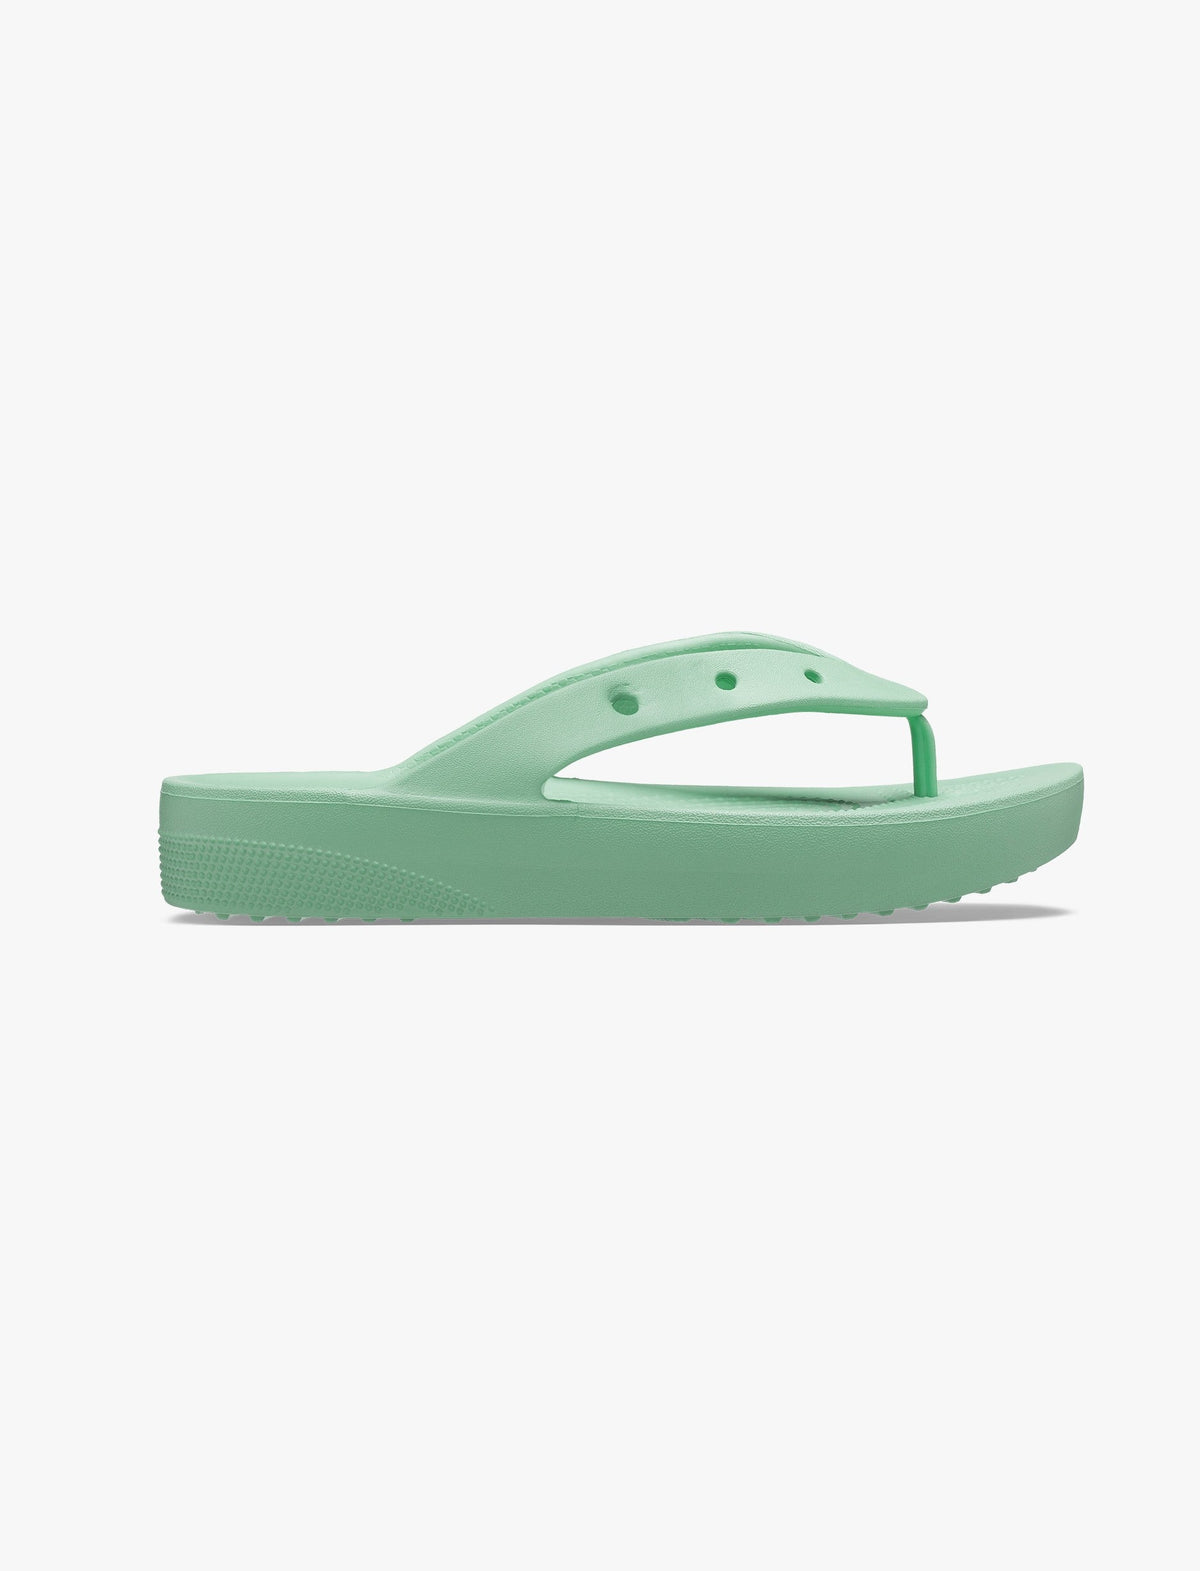 Crocs Classic Platform Flip - כפכפי אצבע פלטפורמה לנשים קרוקס בצבע ג'ייד-Crocs-41-42-נאקו